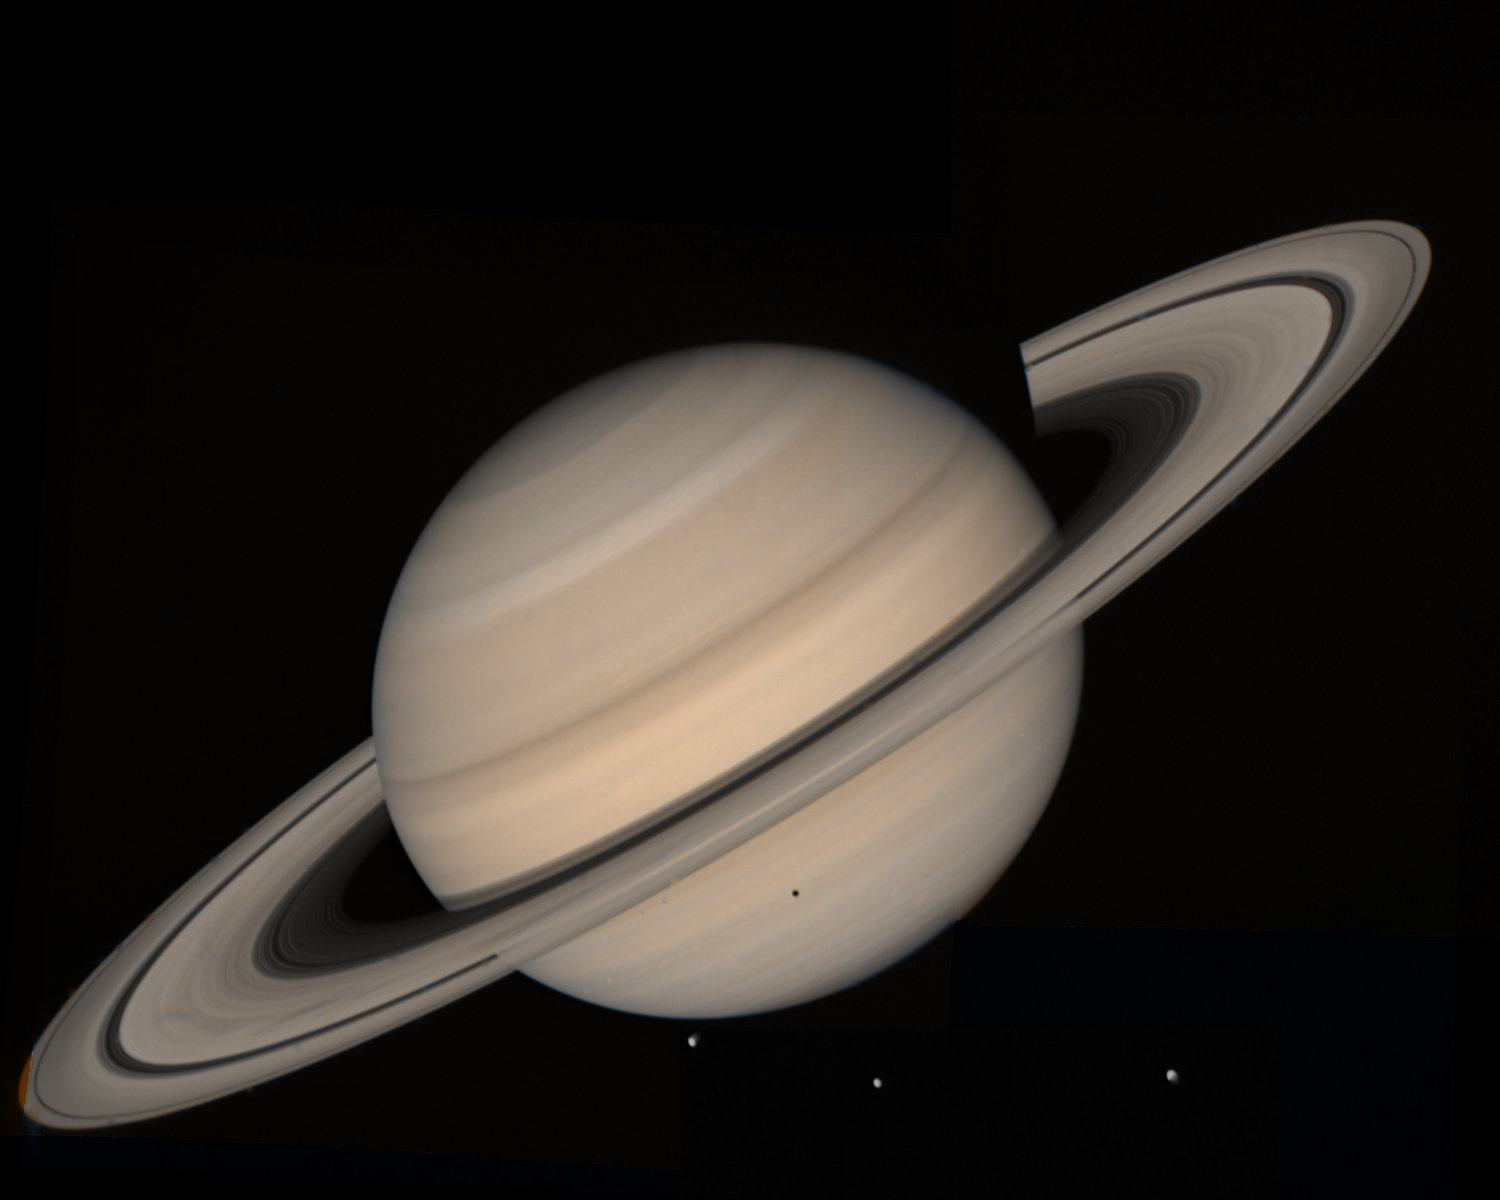 Saturn The Pla HD Wallpaper In Space Imageci